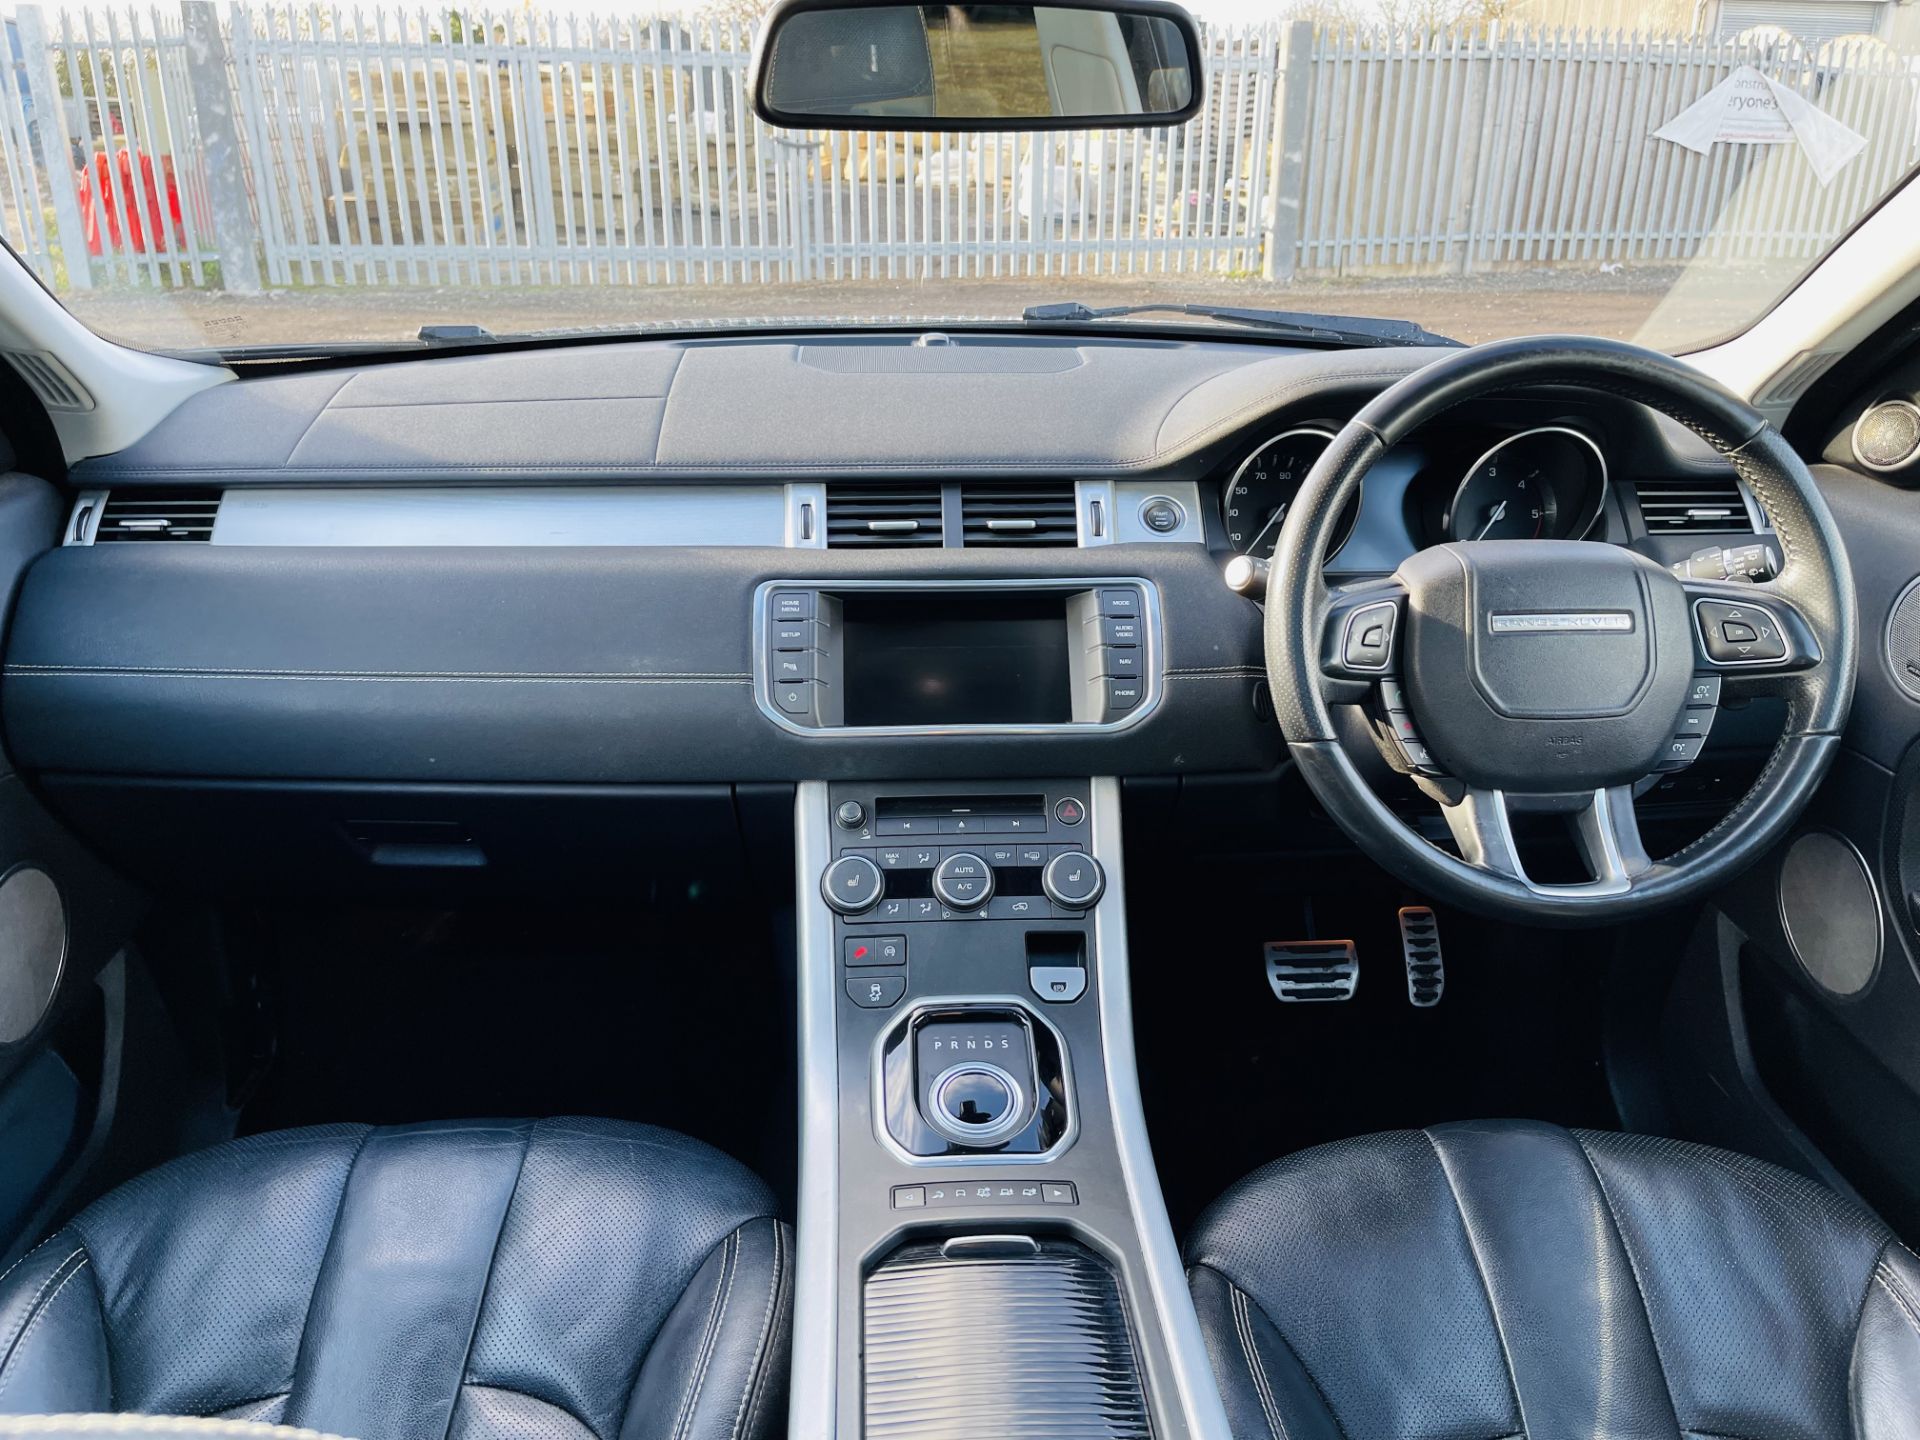 Range Rover Evoque Dynamic 2.2 SD4 4WD Commandshift 2015 '15 Reg' Sat Nav - Panoramic Roof - Image 22 of 38